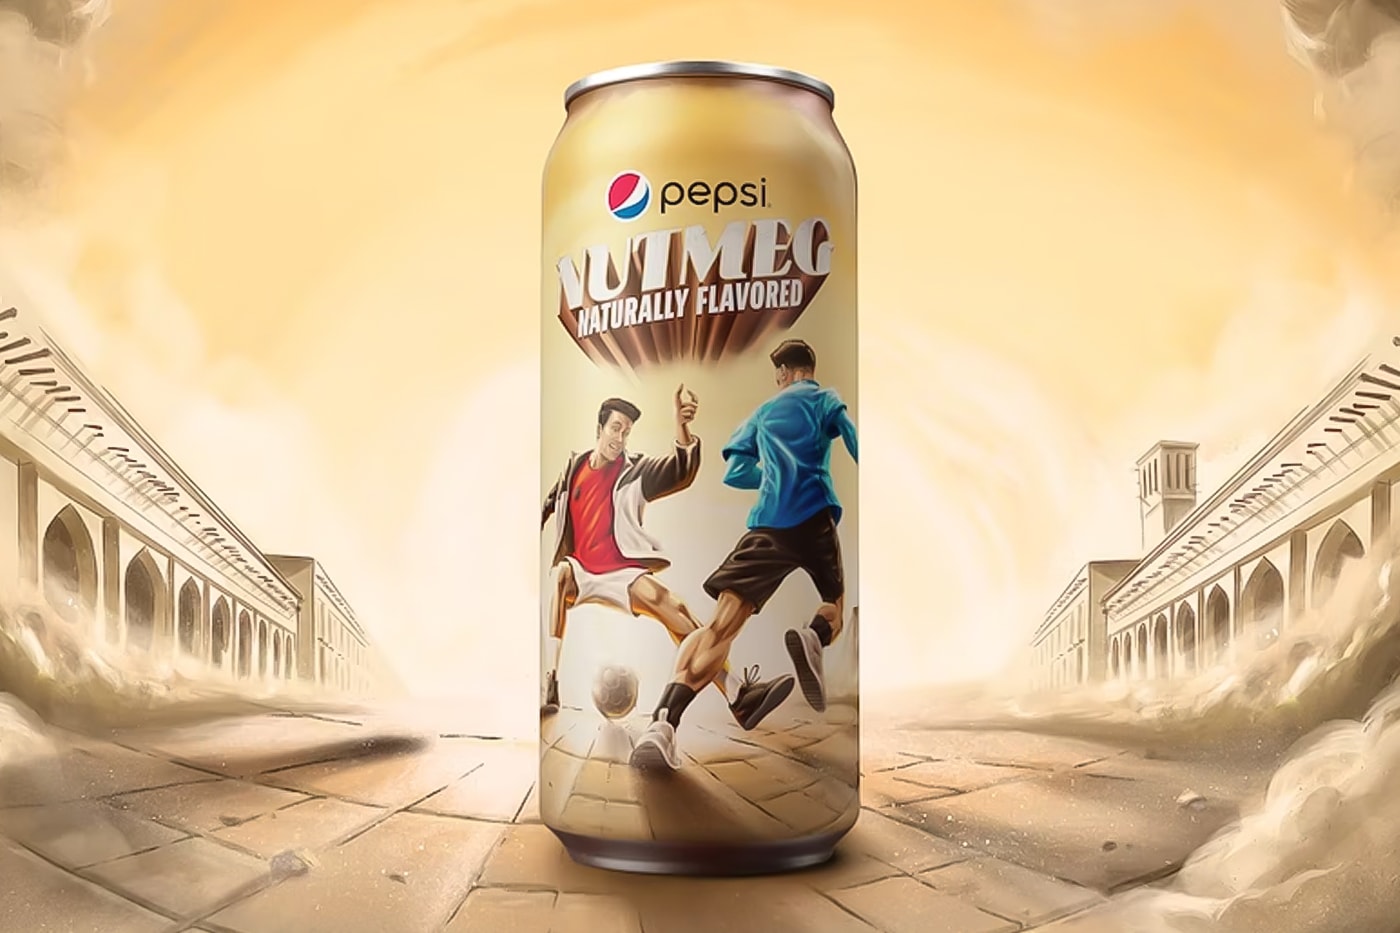 pepsi nutmeg flavor messi pogba ronaldinho morocco qatar wold cup 2022 release info date price